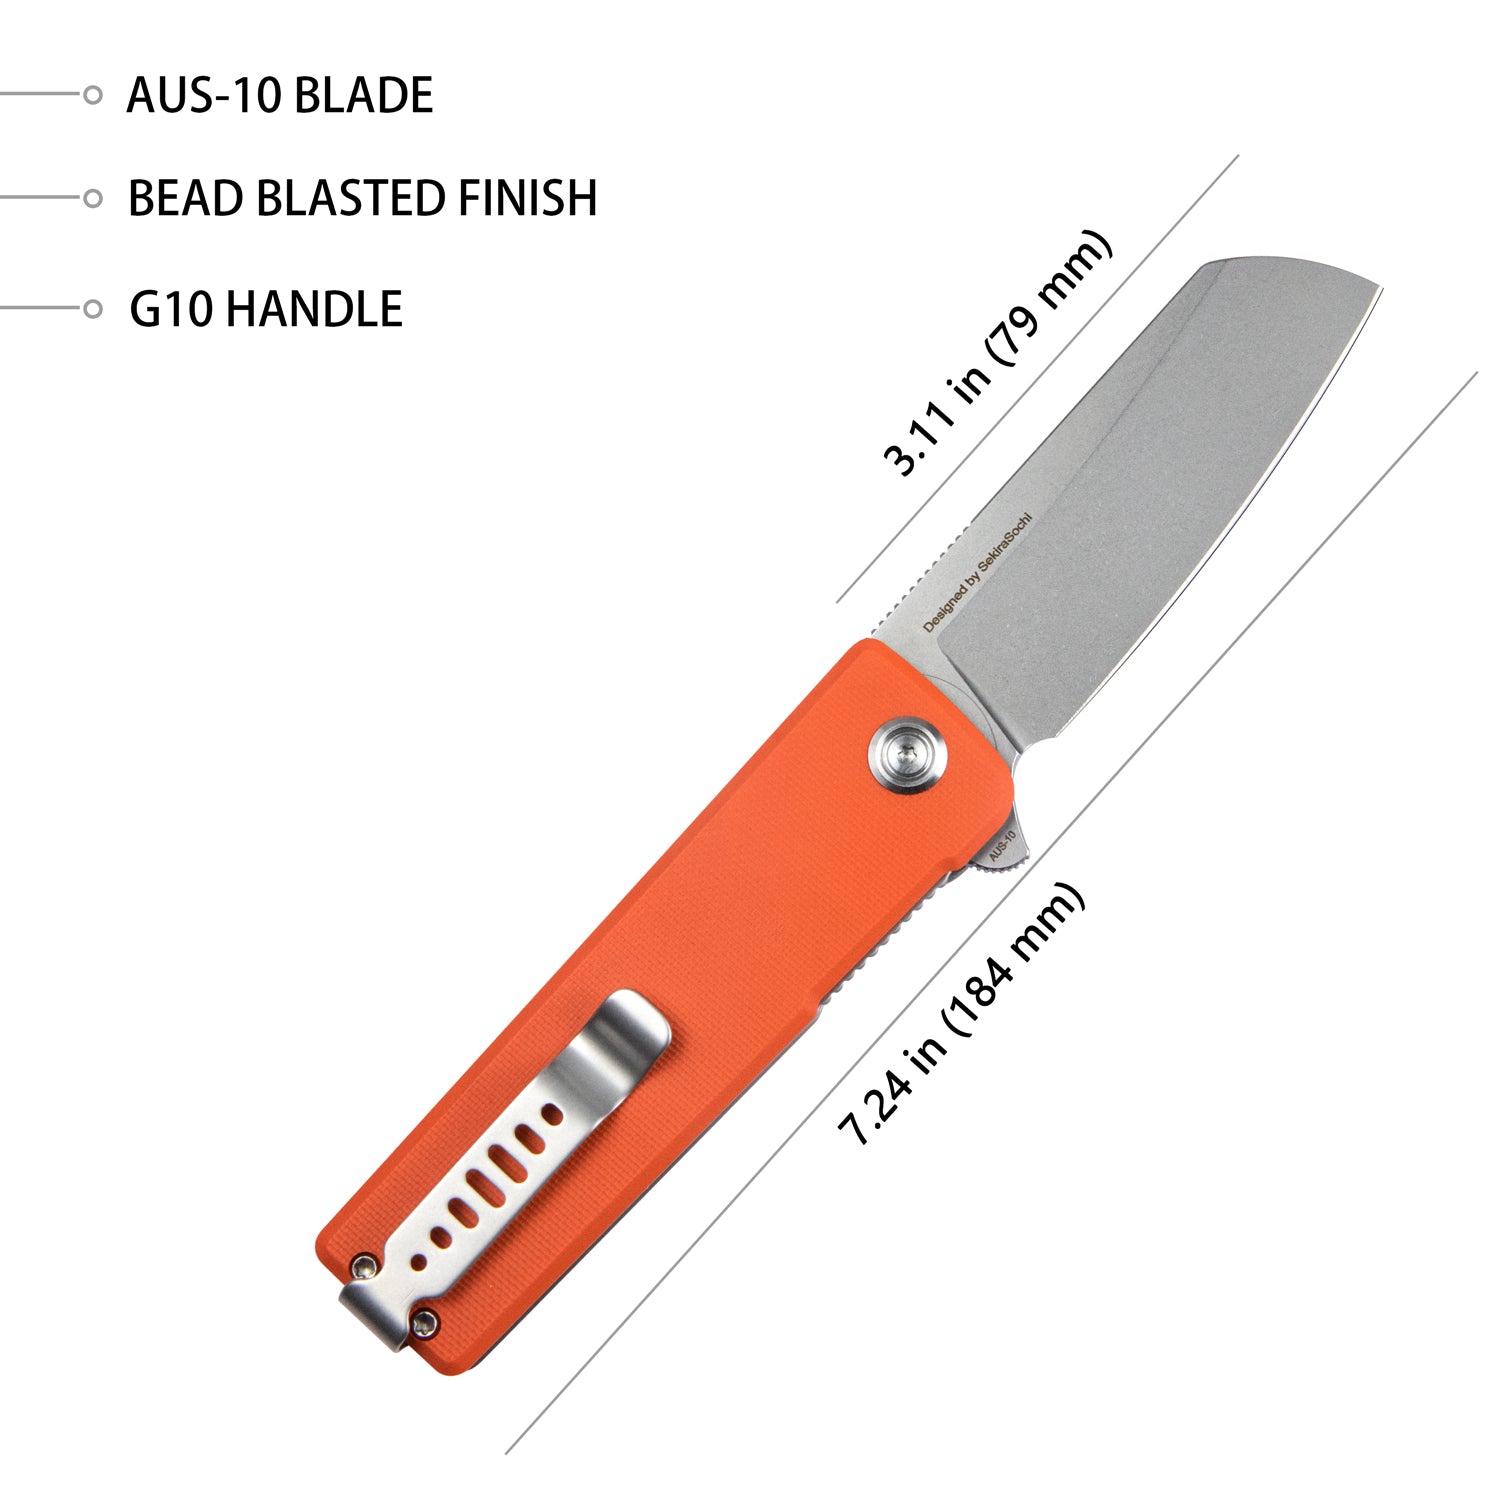 Kubey Sailor Klappmesser Liner Lock Flipper Outdoor Pocket Knife Orange G10 Handle 3.11" Bead Blasted AUS-10 Blade KU317G